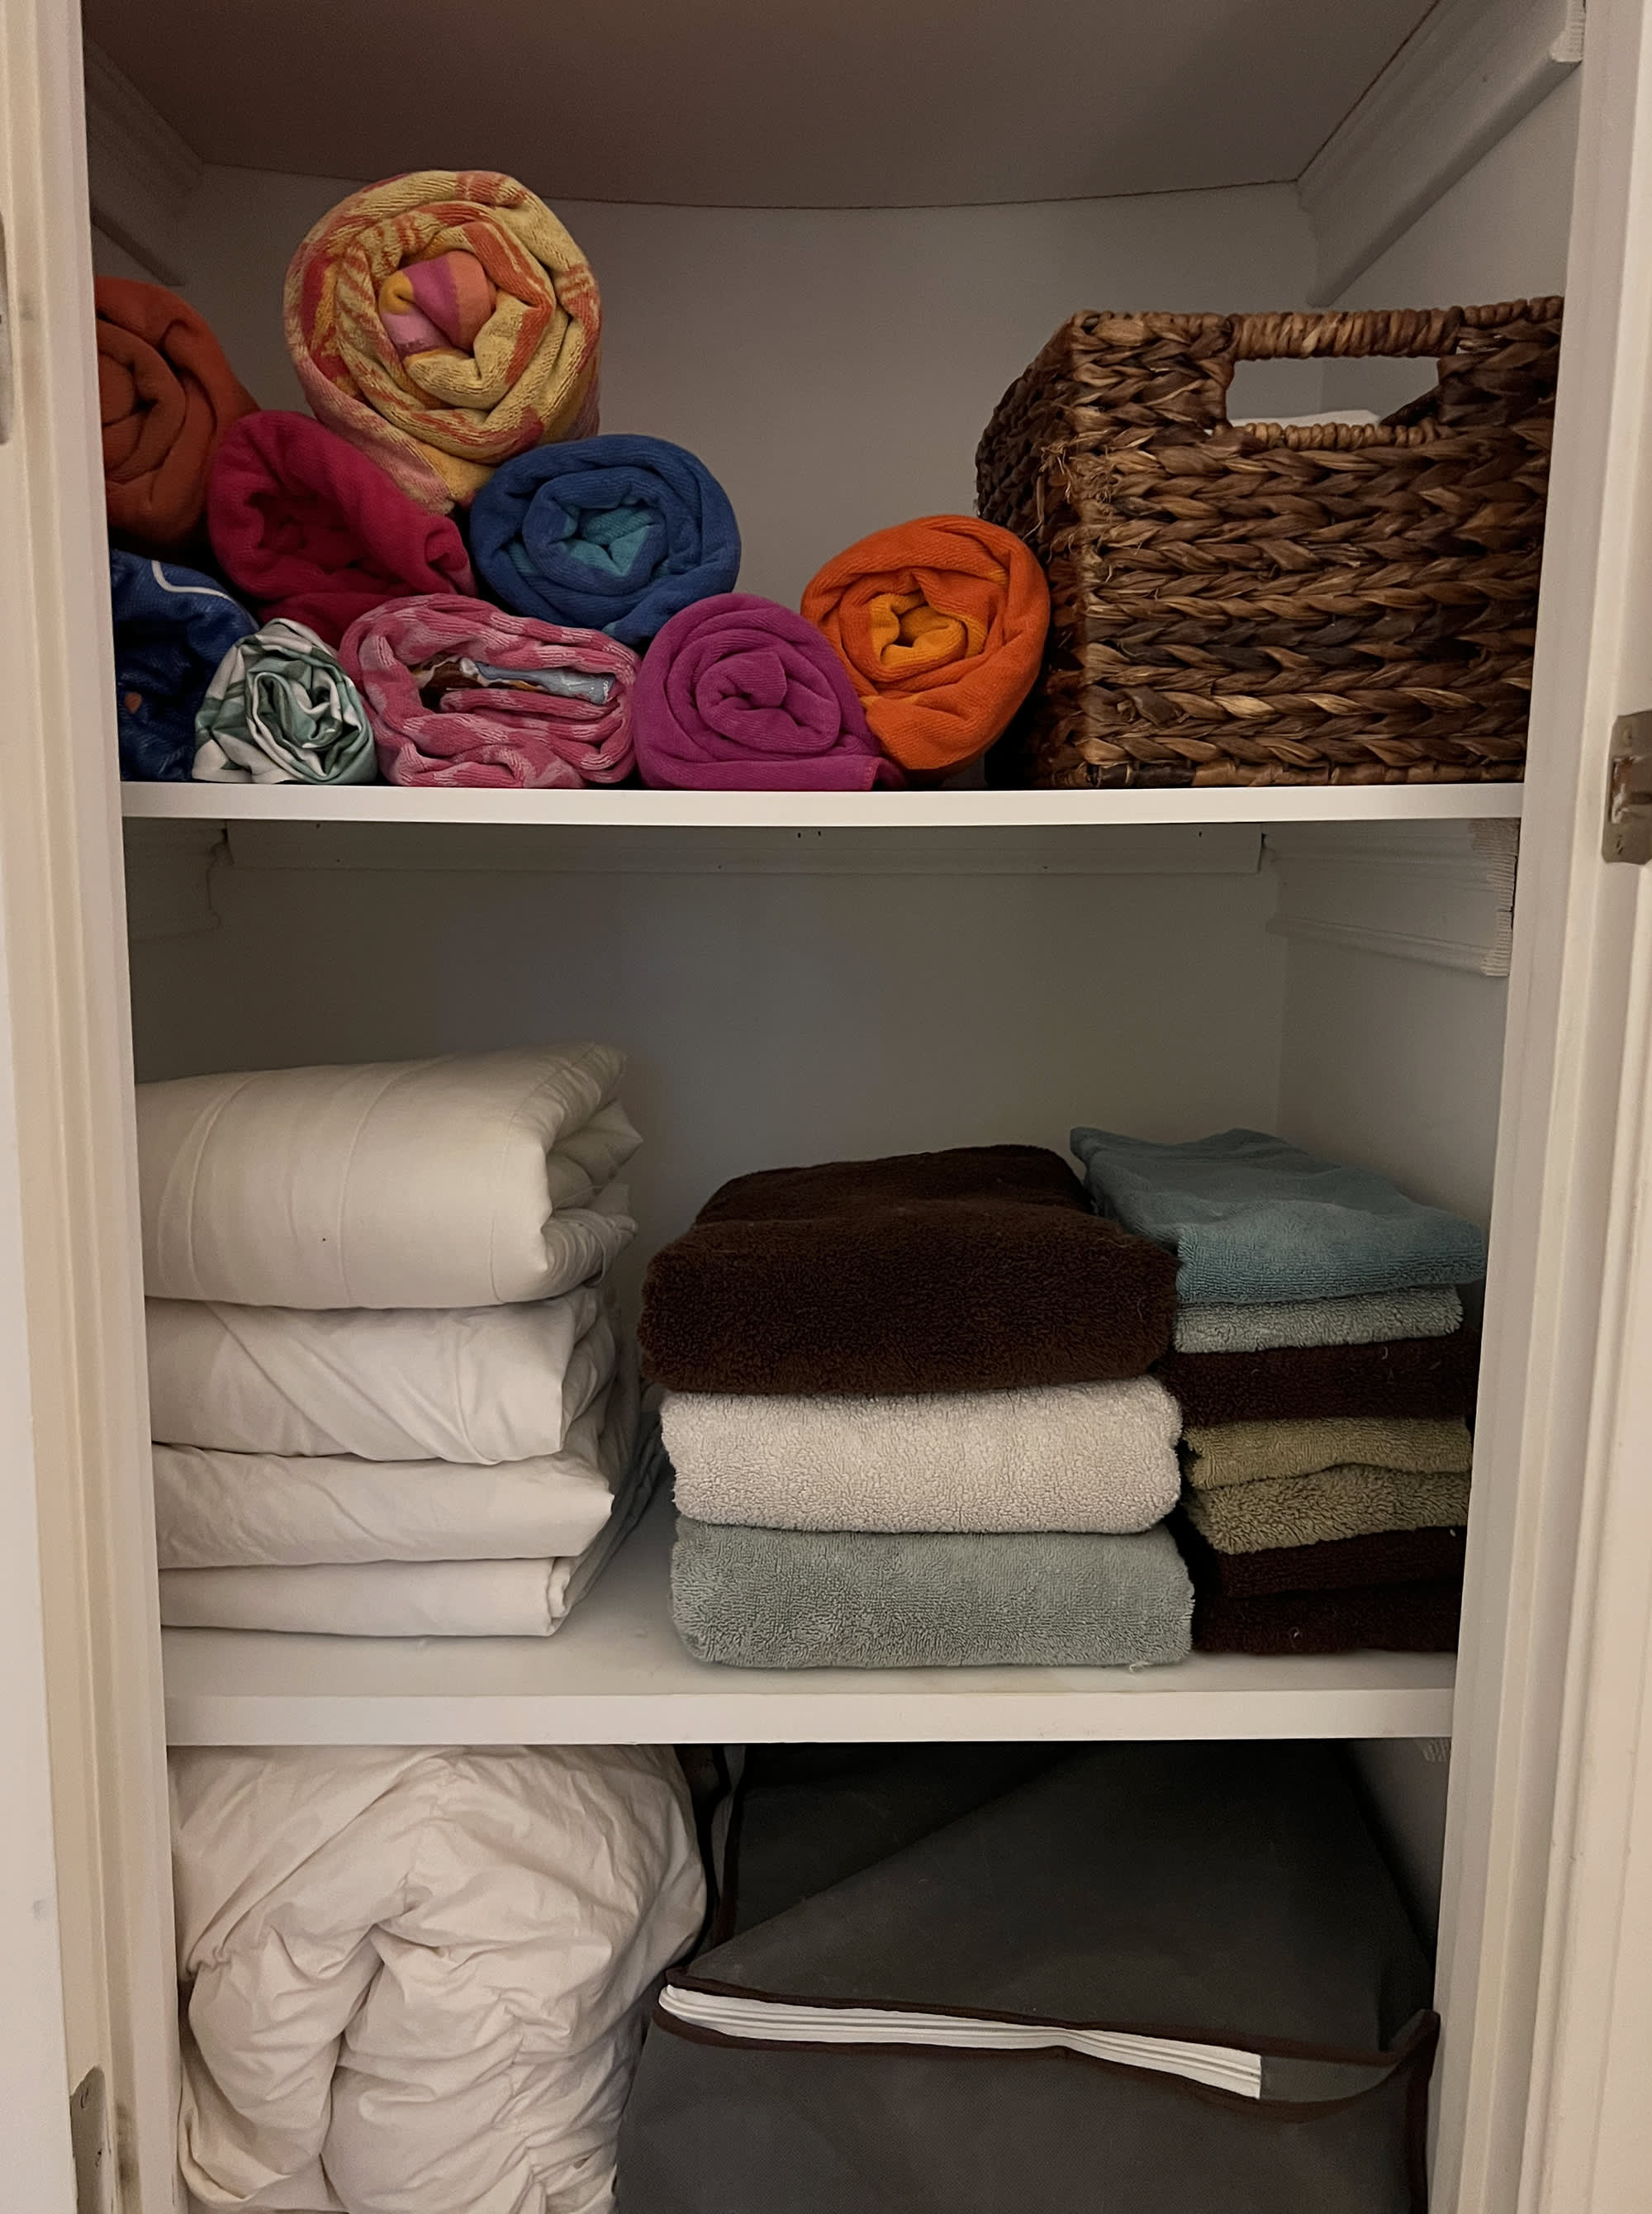 https://cdn.apartmenttherapy.info/image/upload/v1688737329/at/organize-clean/2023/Writer%20Provided/pro-organizer-linen-closet/linen-closet-3.jpg